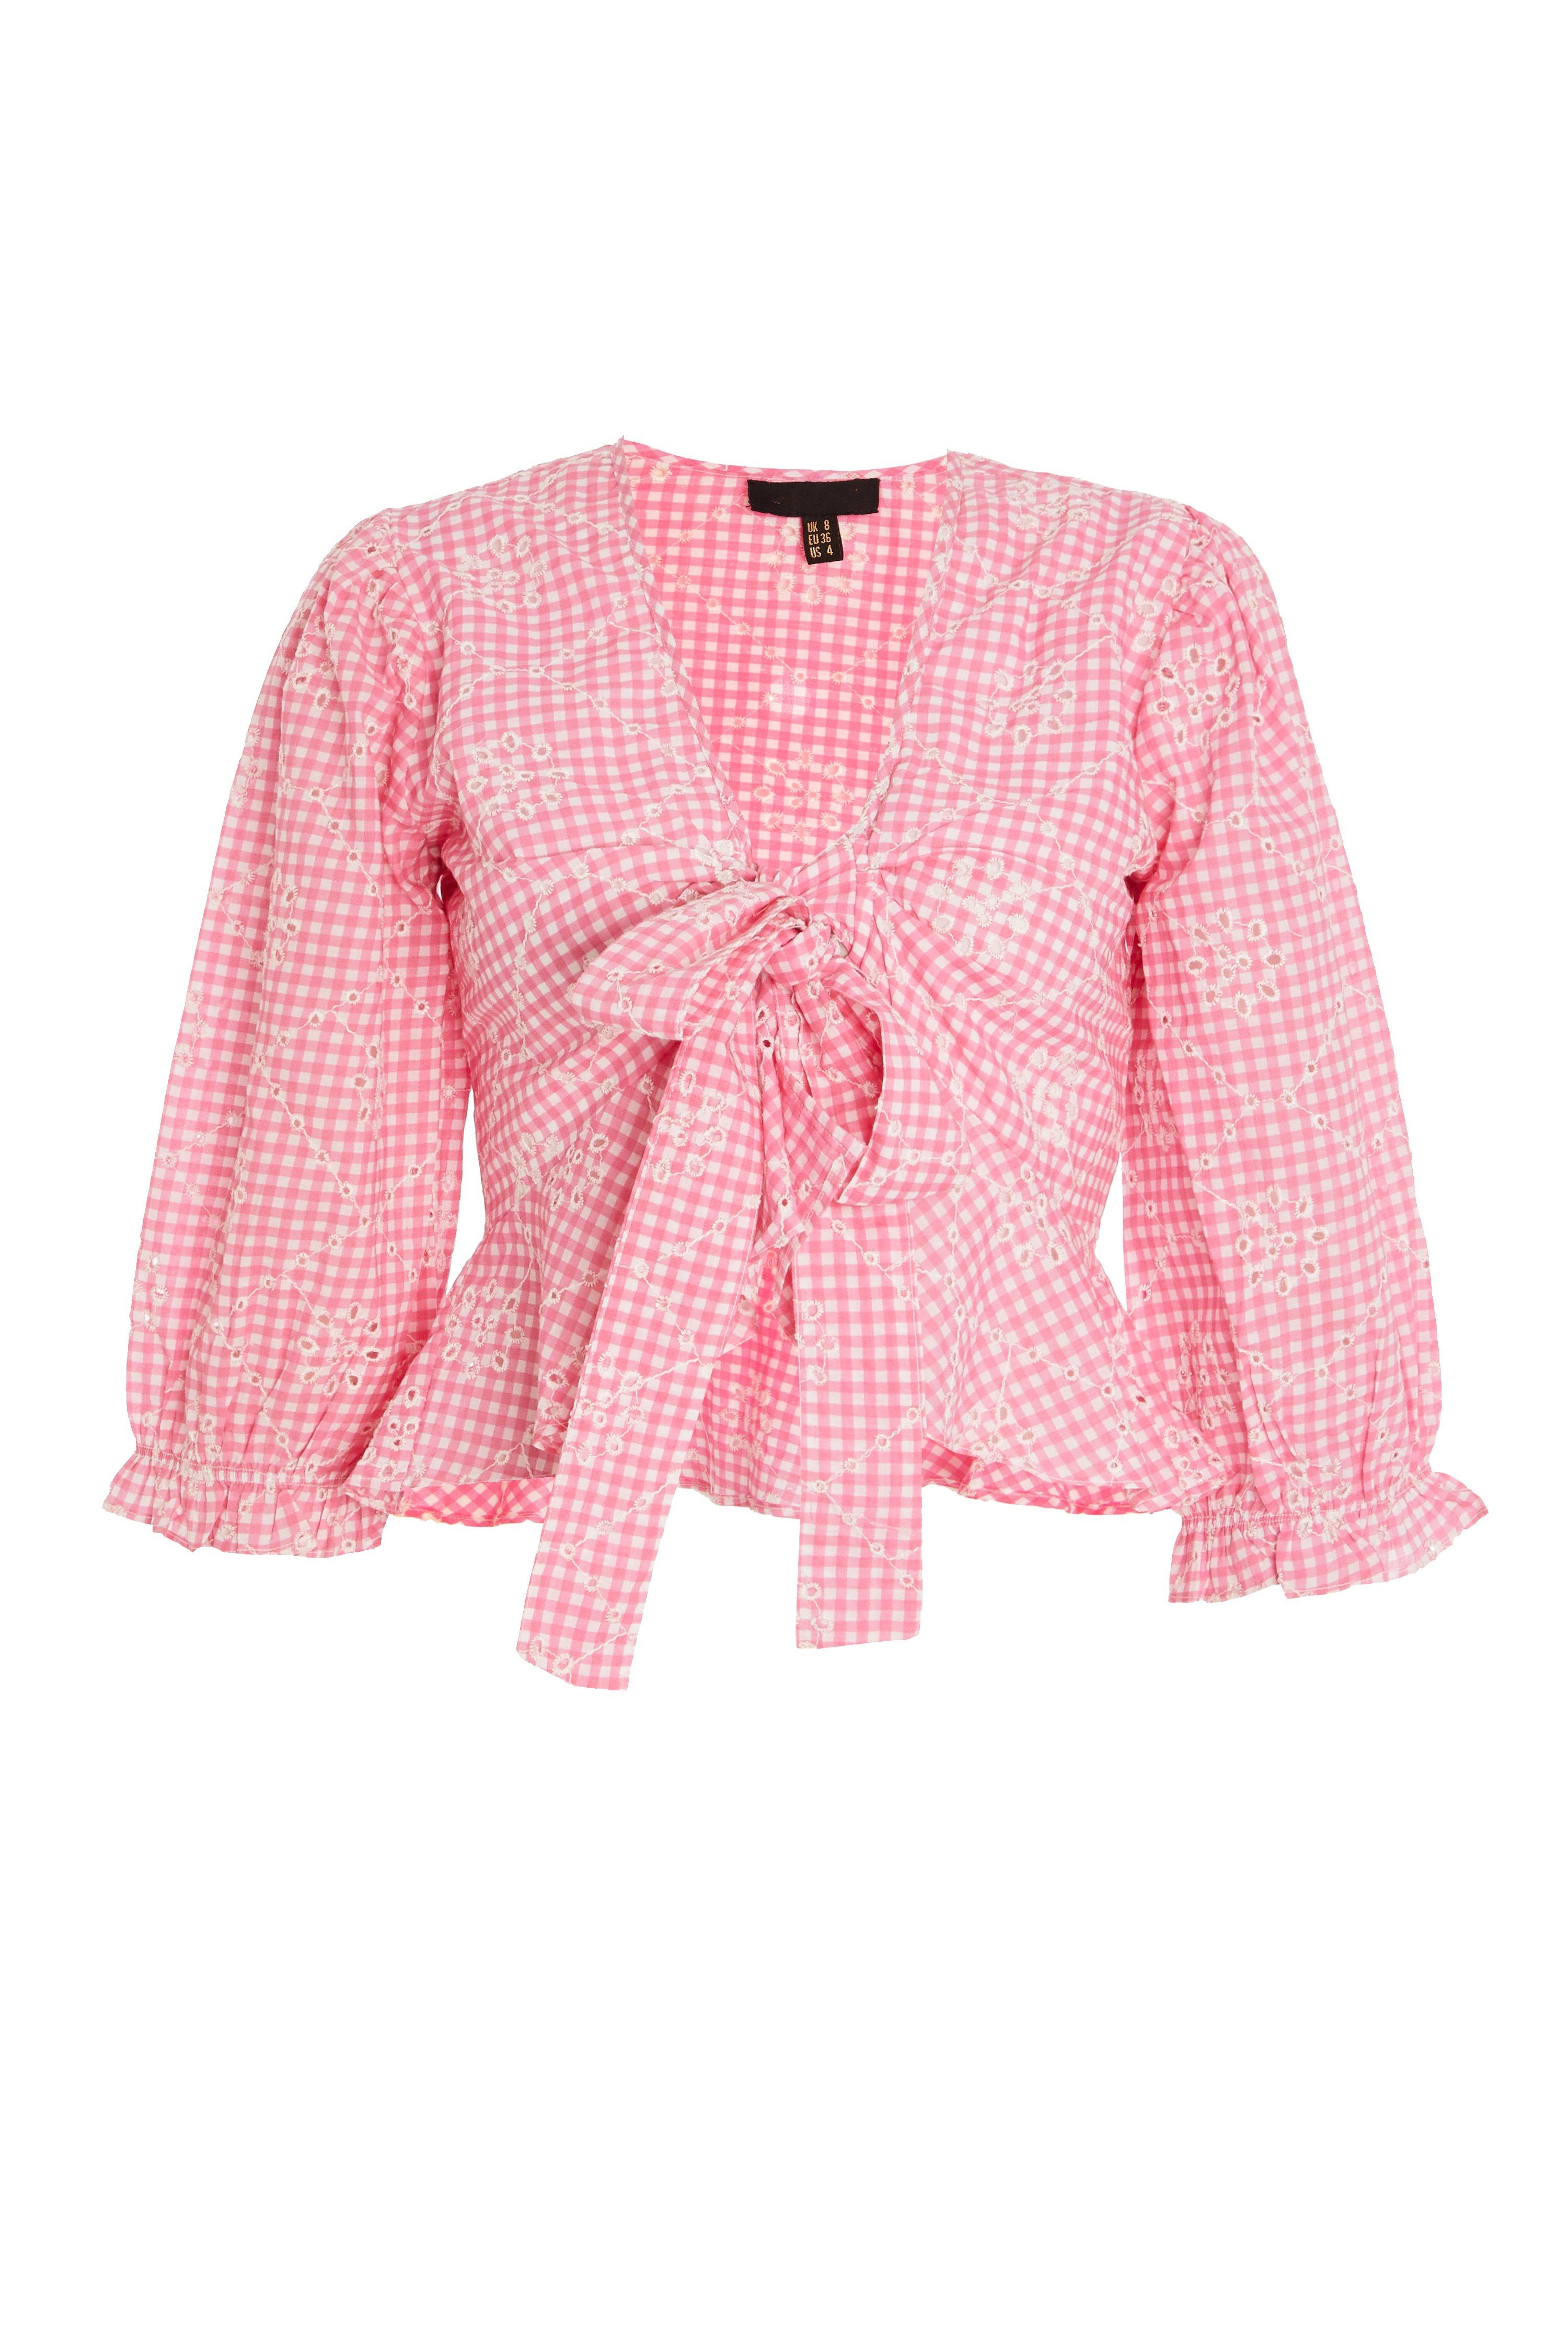 Pink Gingham Tie Front Top - Quiz Clothing